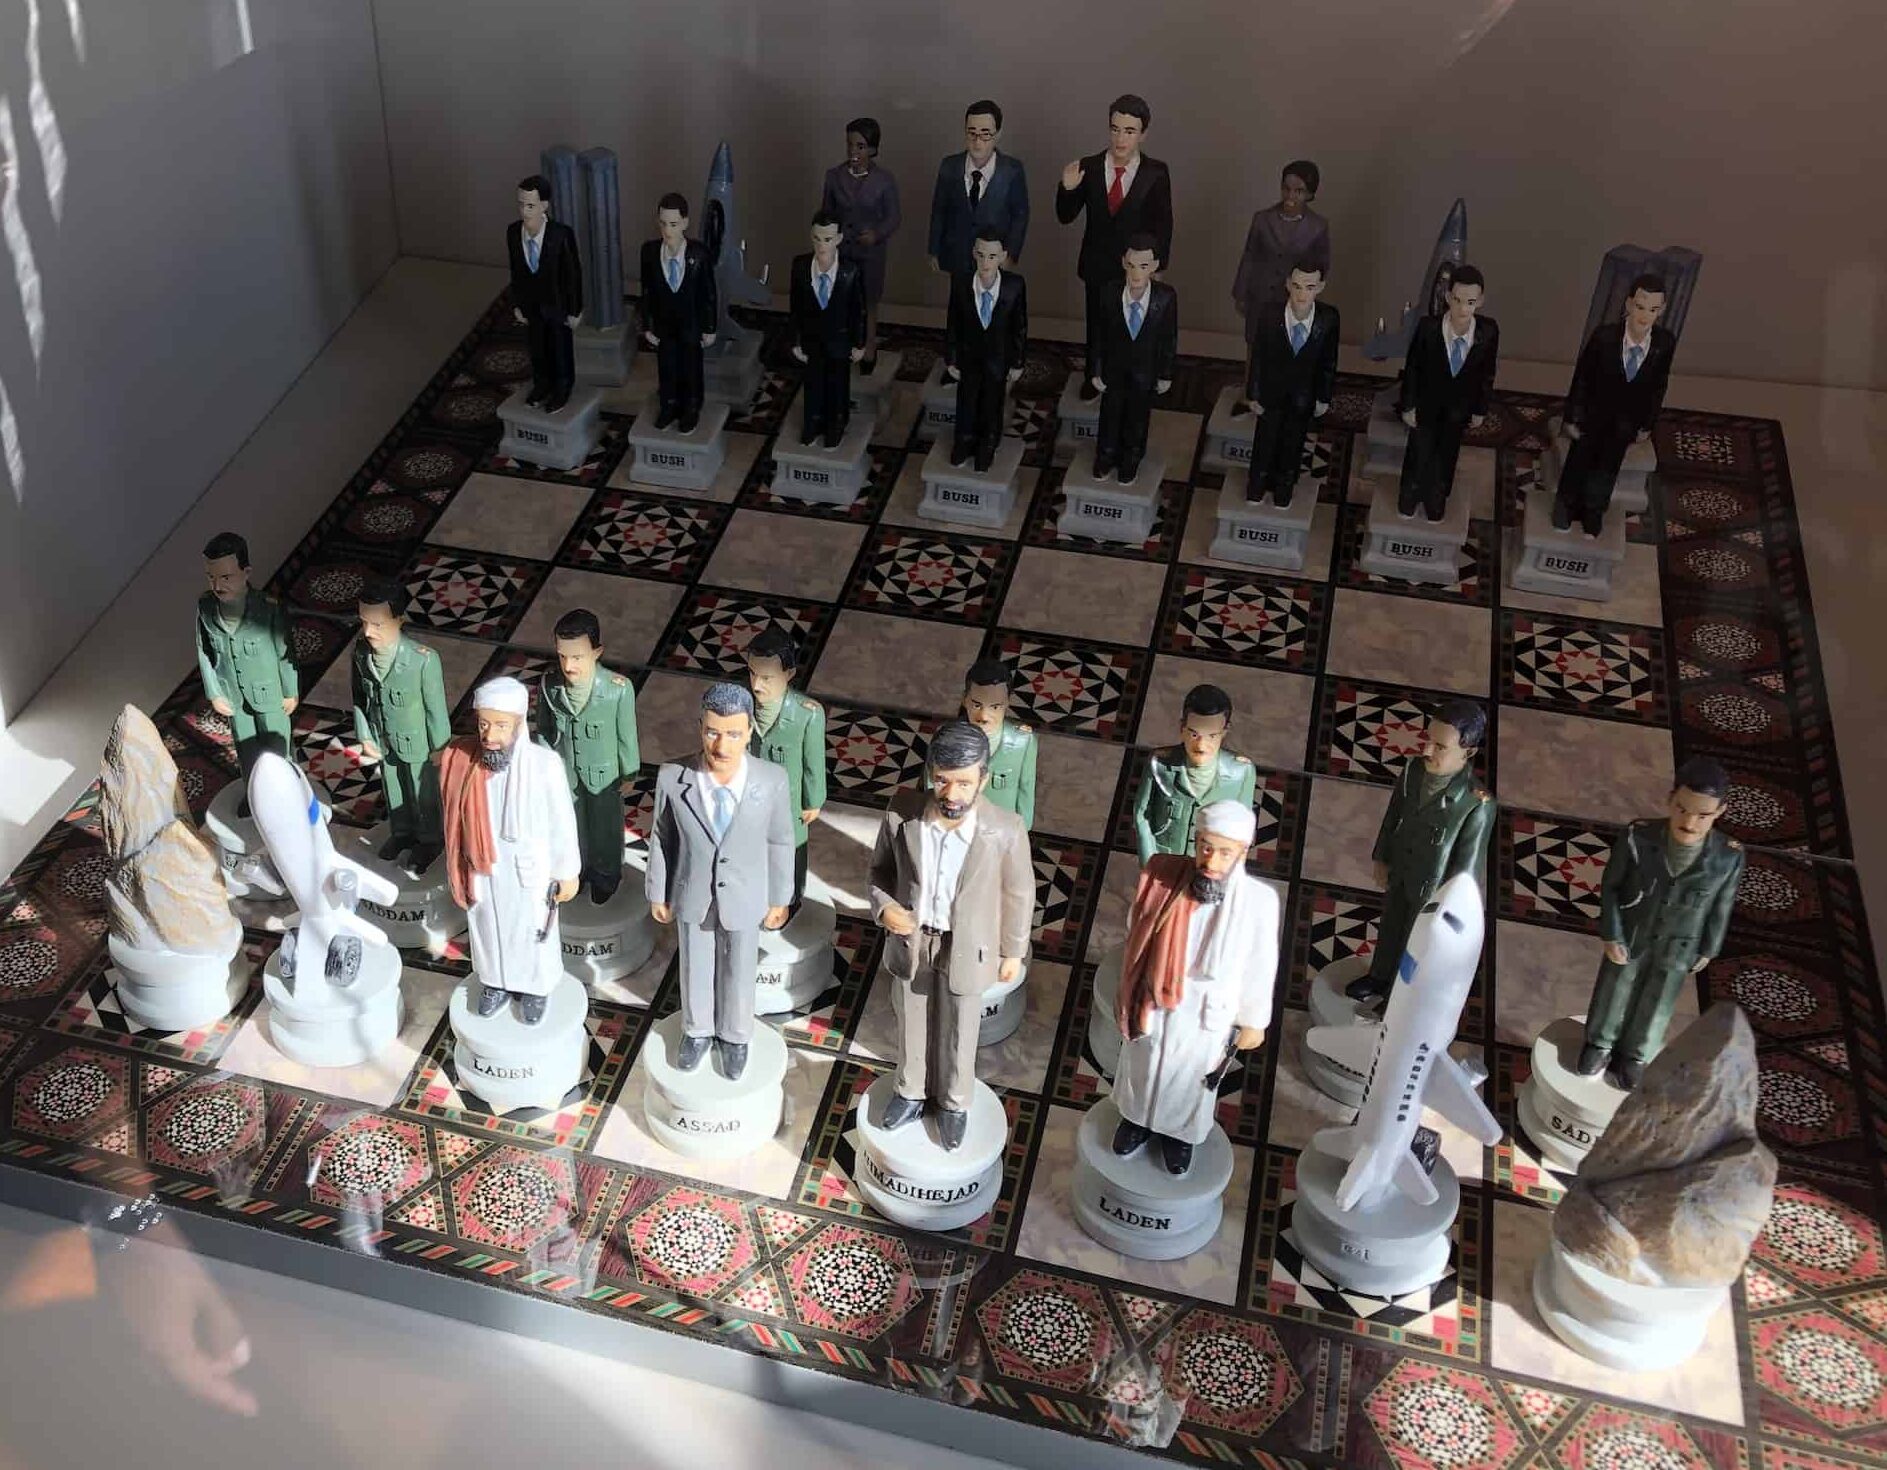 9/11 themed chess set (USA) at the Gökyay Foundation Chess Museum in Ankara, Turkey